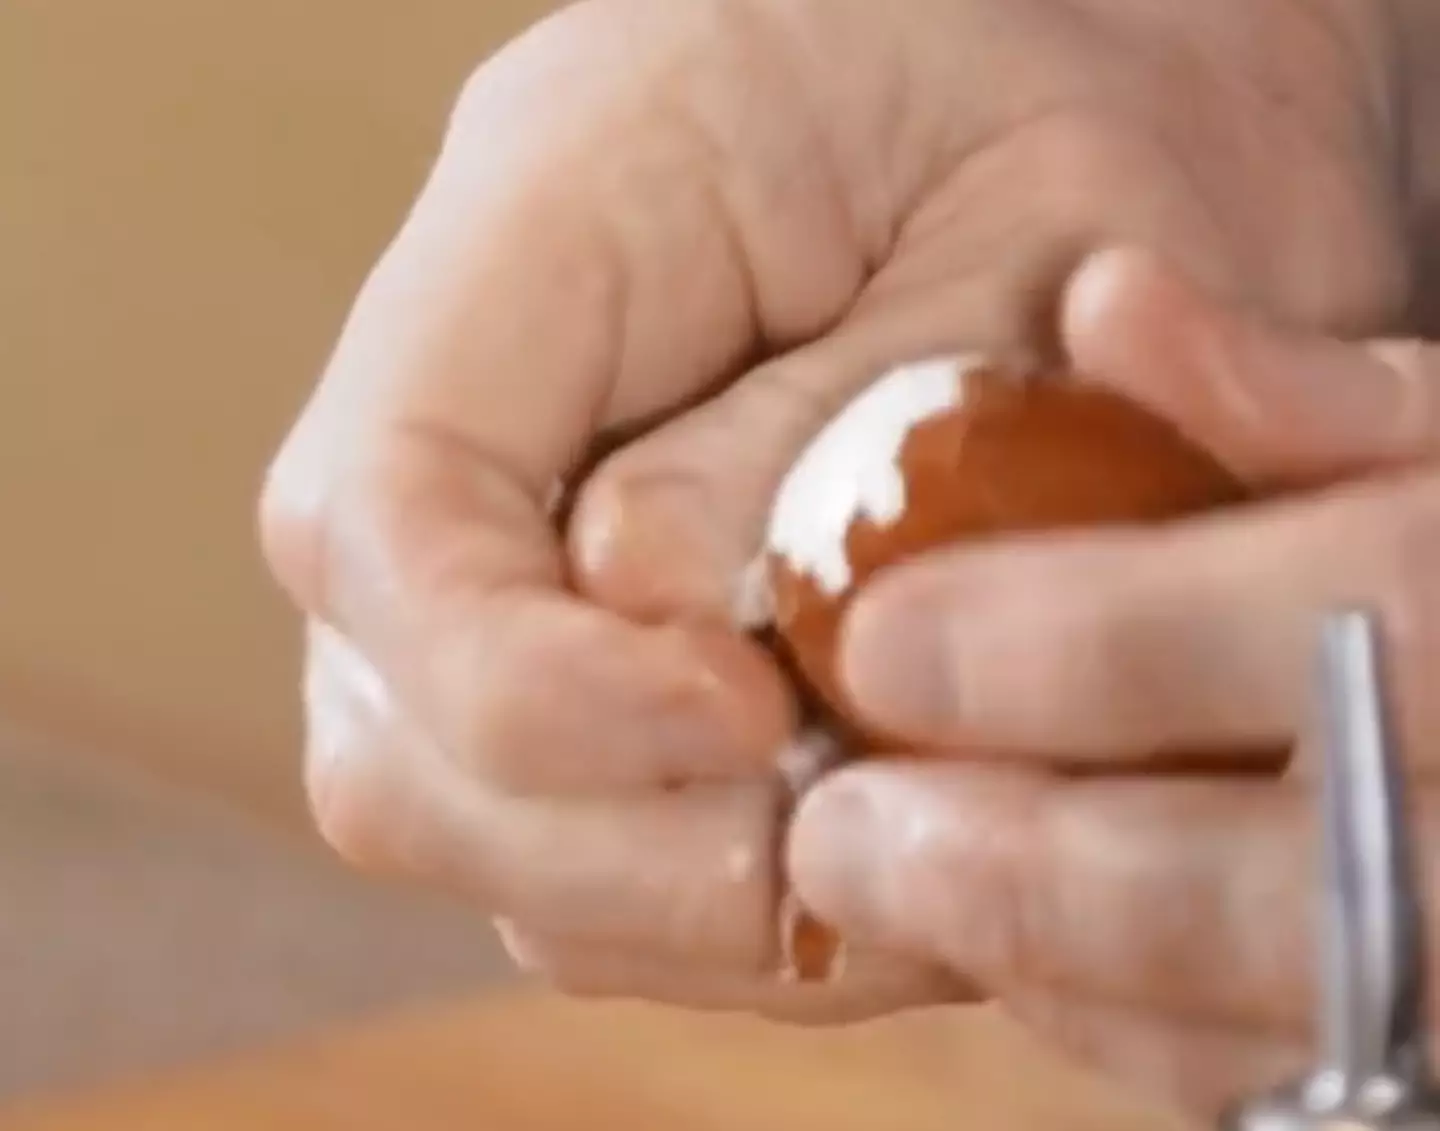 Gordon's trick allowed him to easily peel eggs.